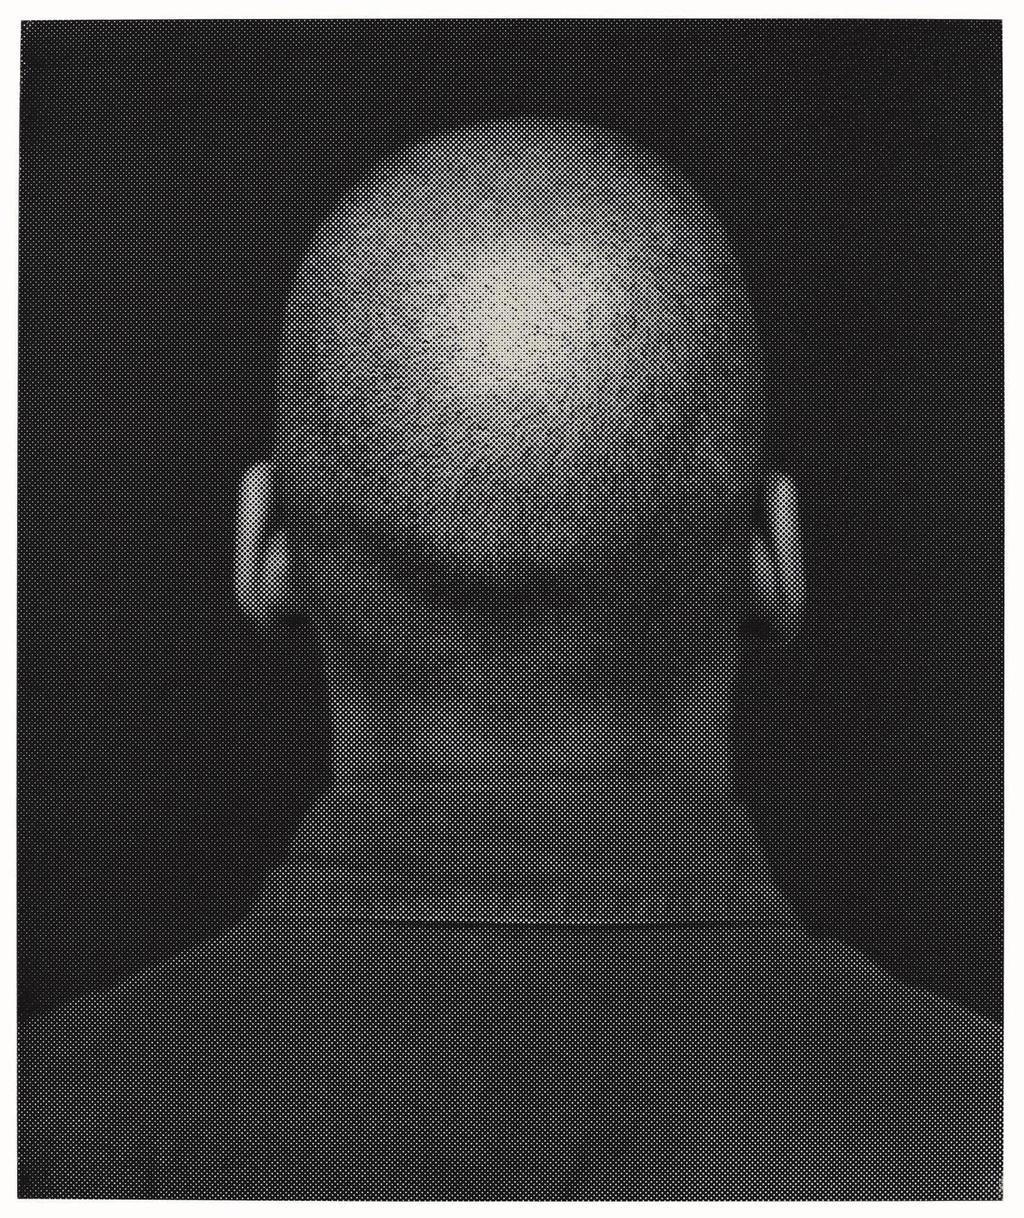 Images and Additional Information Glenn Ligon, Self-Portrait, 1996.